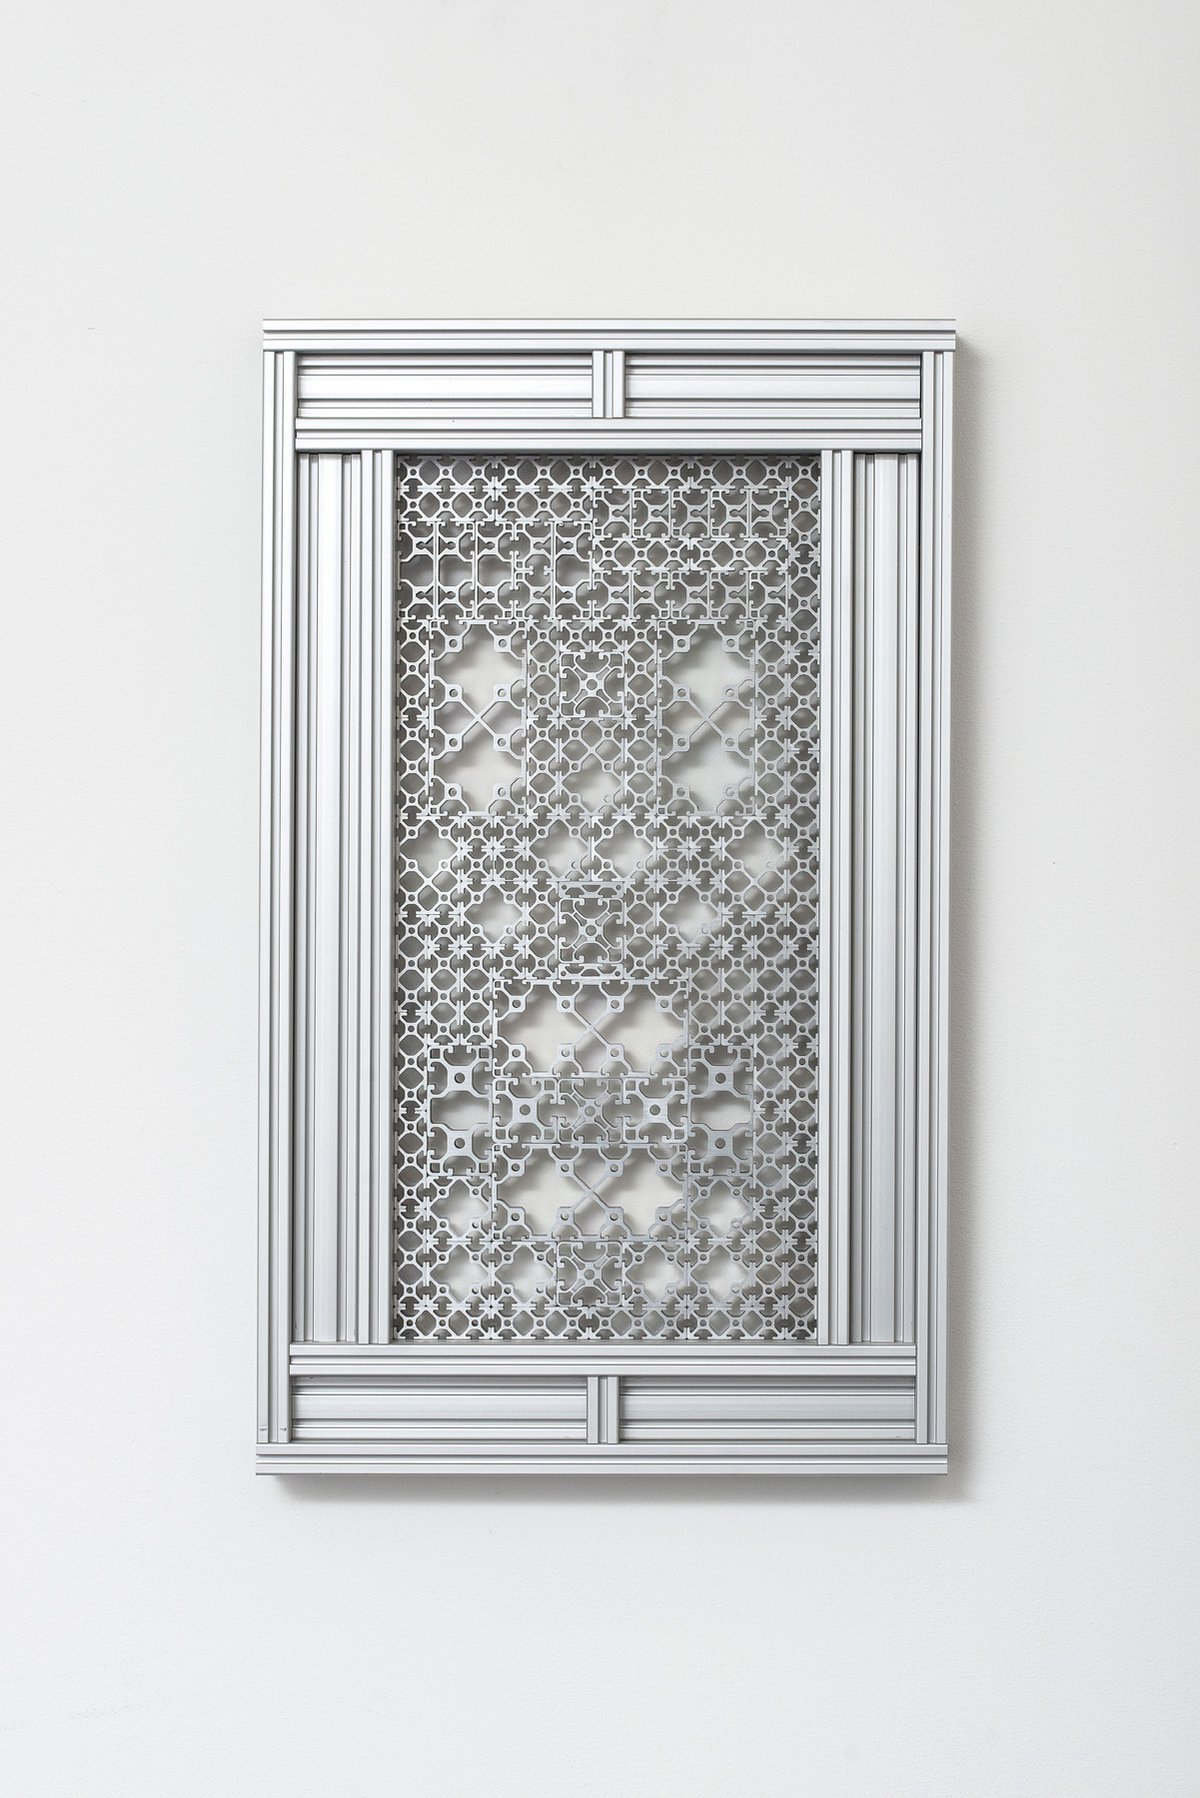 Hans-Christian LotzUntitled, 2018Aluminium, acrylic glass, silicone70 x 42 x 6 cm